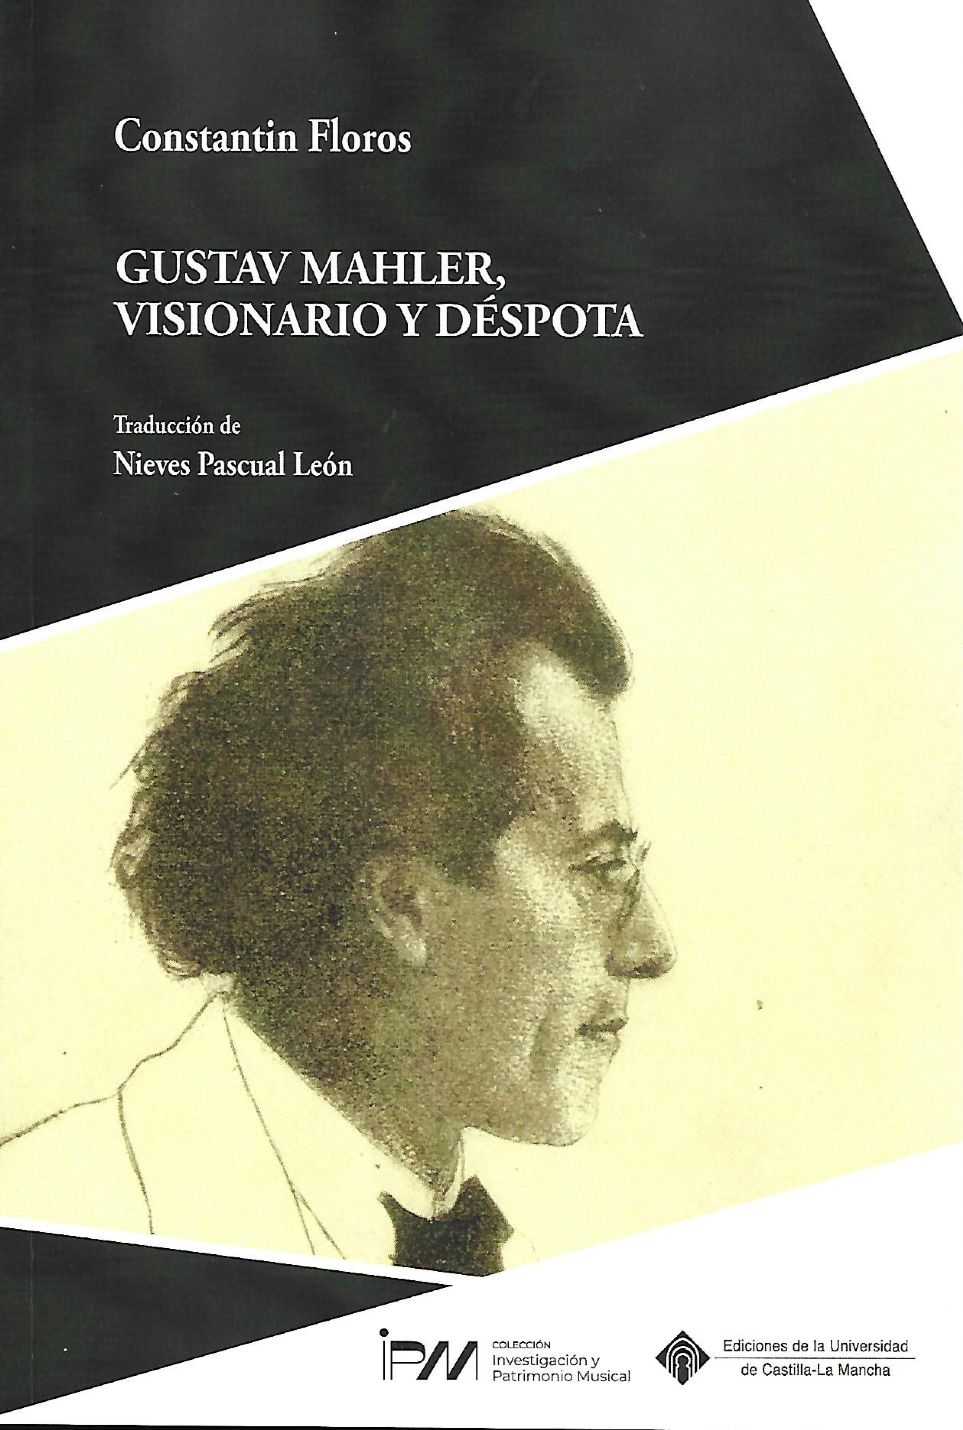 Gustav Mahler visionario y dspota